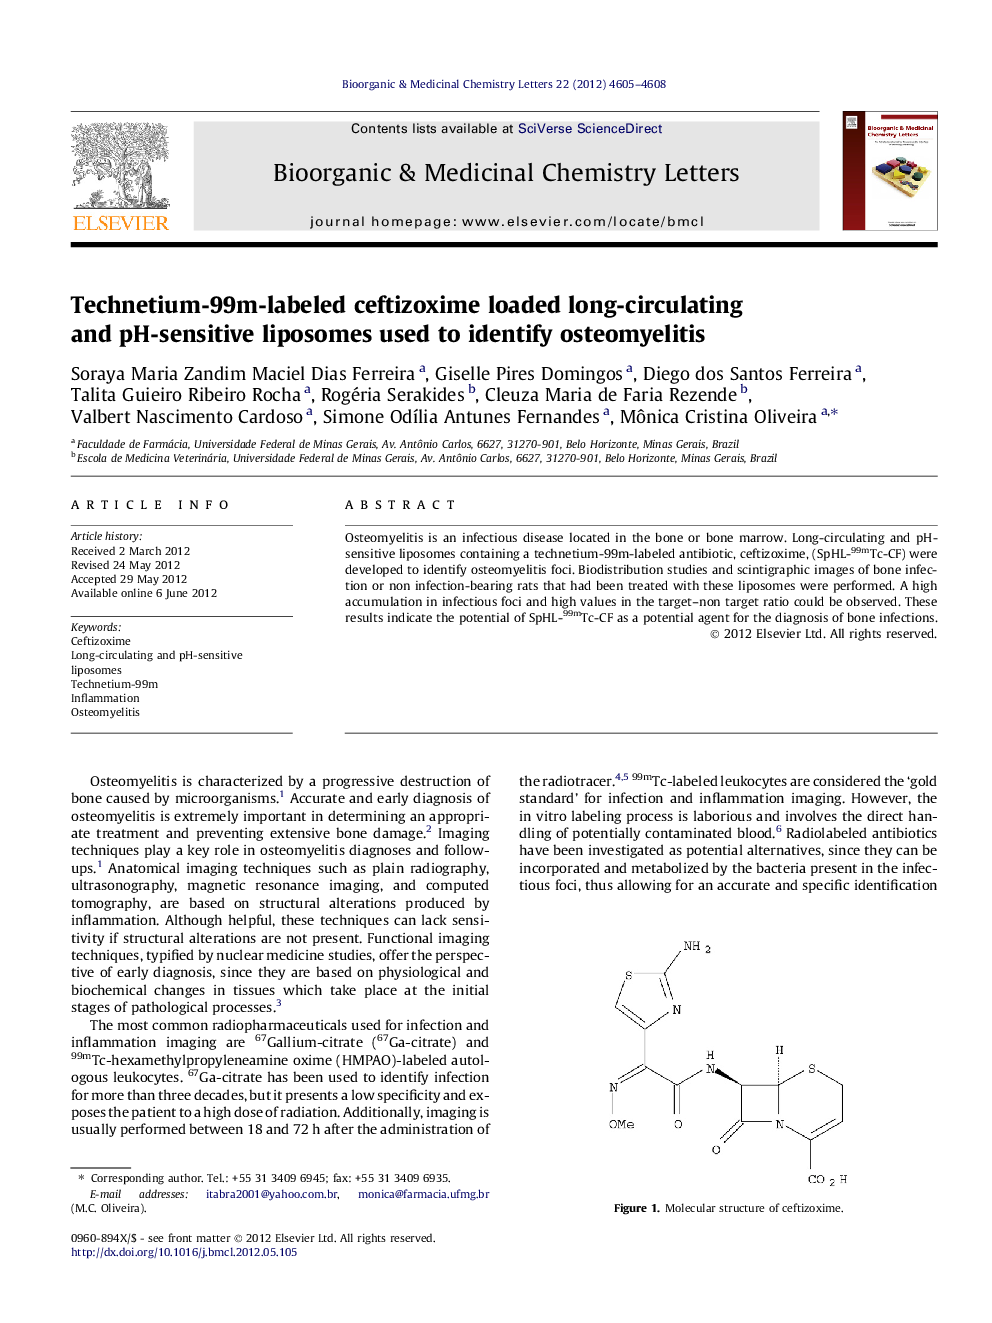 Technetium-99m-labeled ceftizoxime loaded long-circulating and pH-sensitive liposomes used to identify osteomyelitis